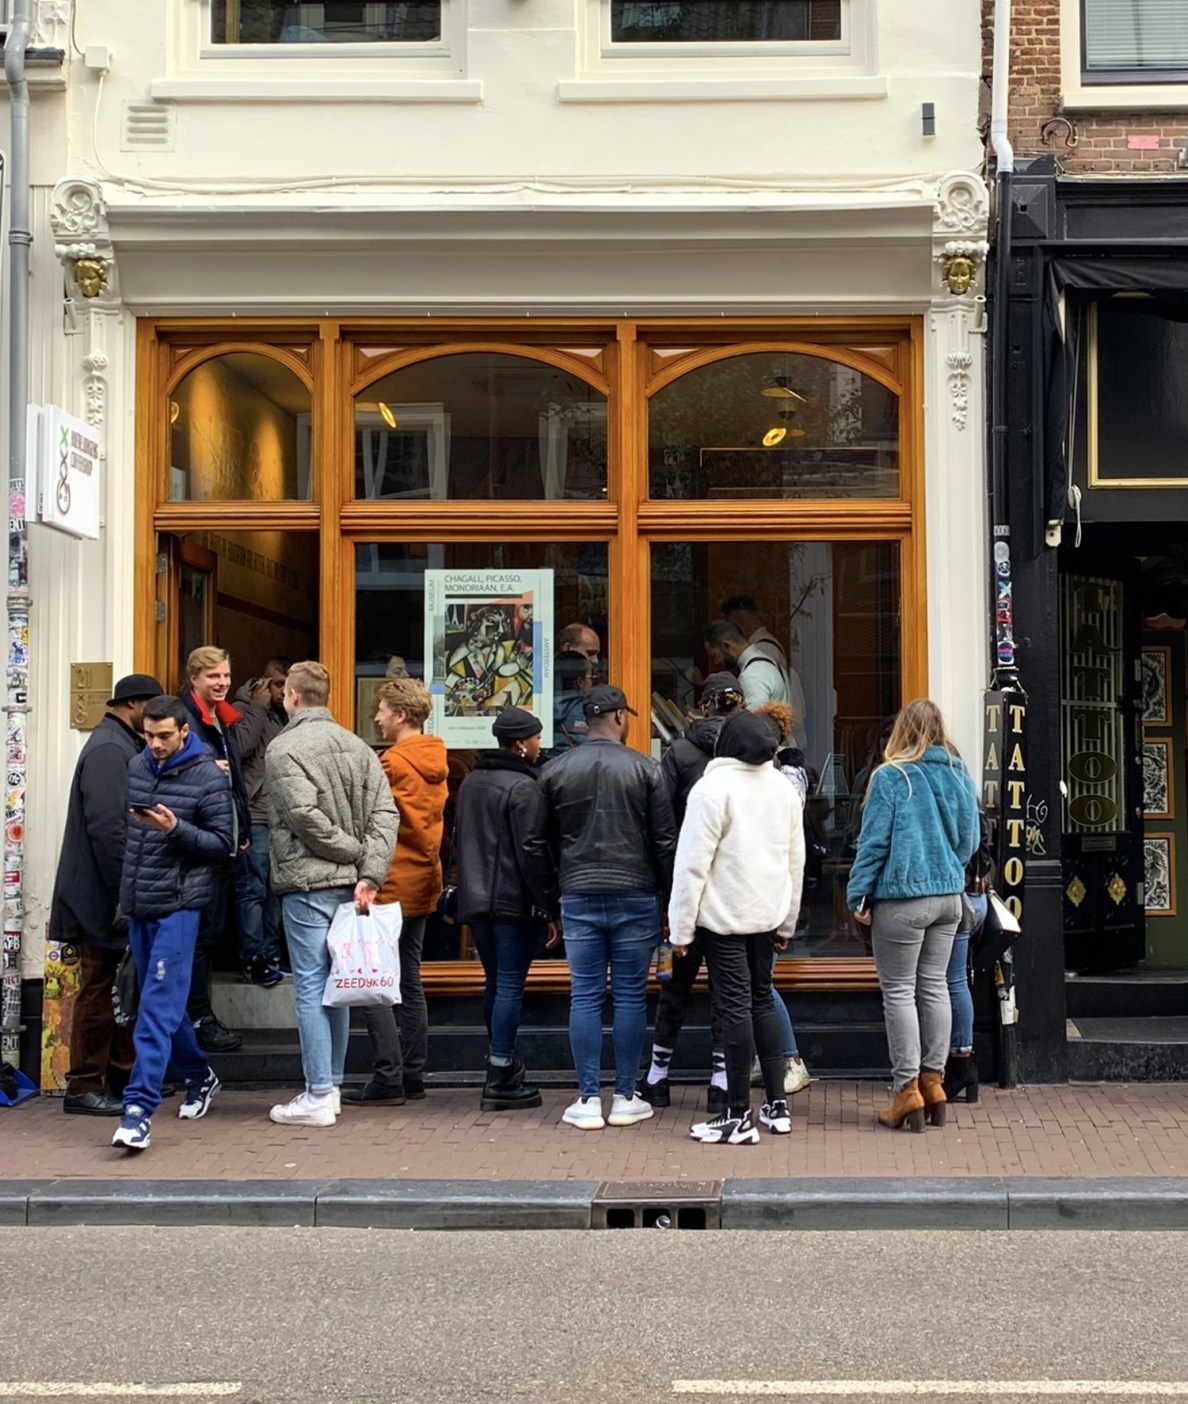 Boerejongens Center Coffeeshop at the Utrechtsestraat